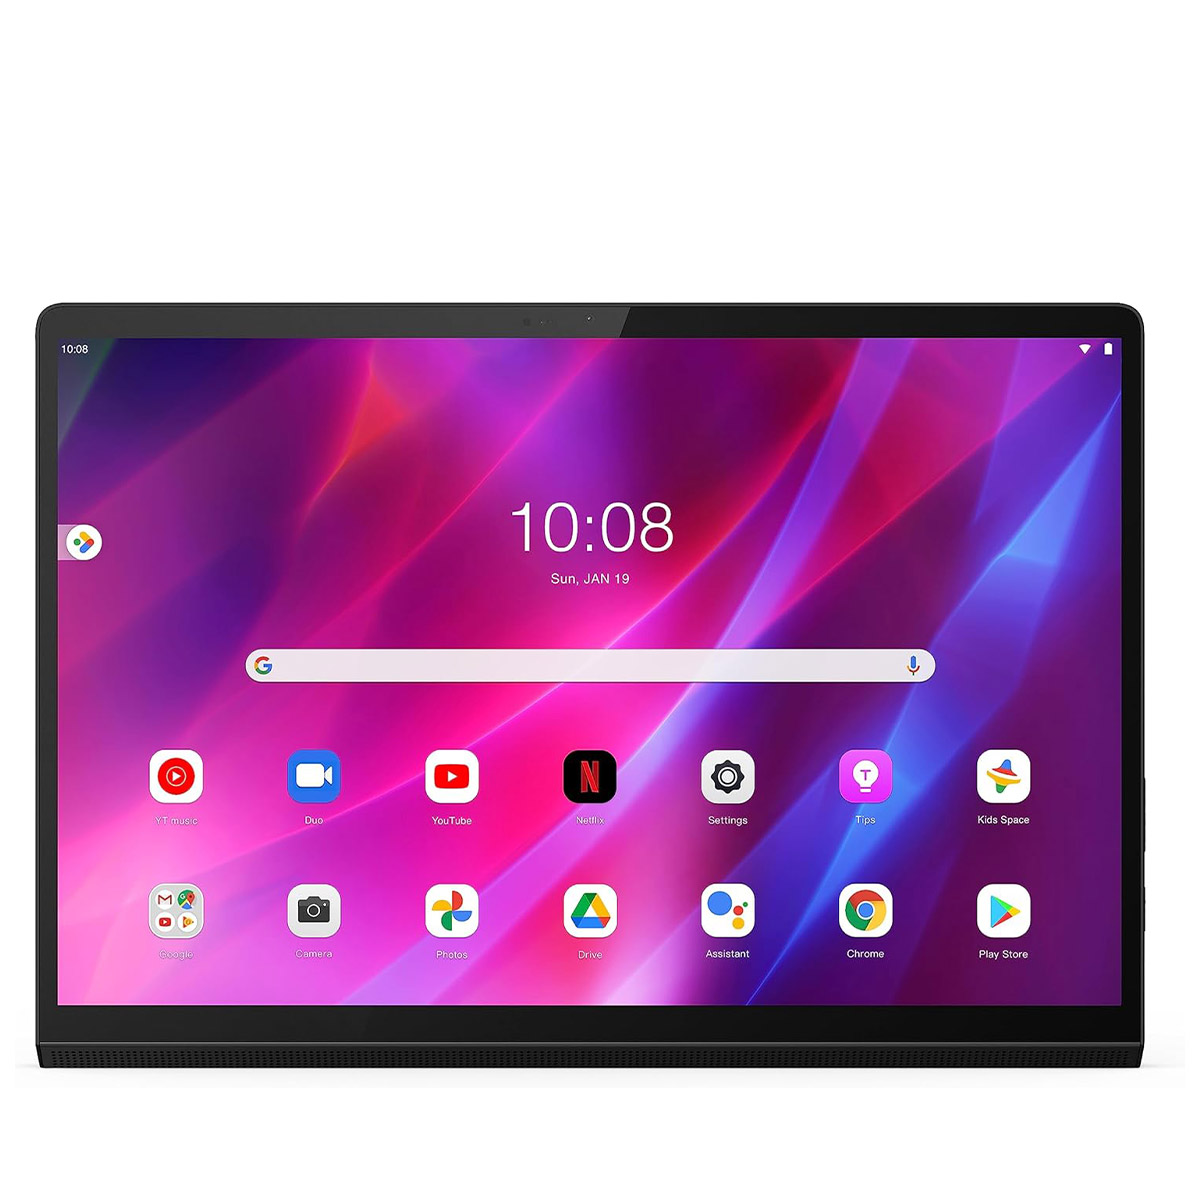 Lenovo Yoga Tablet 13 on a white background